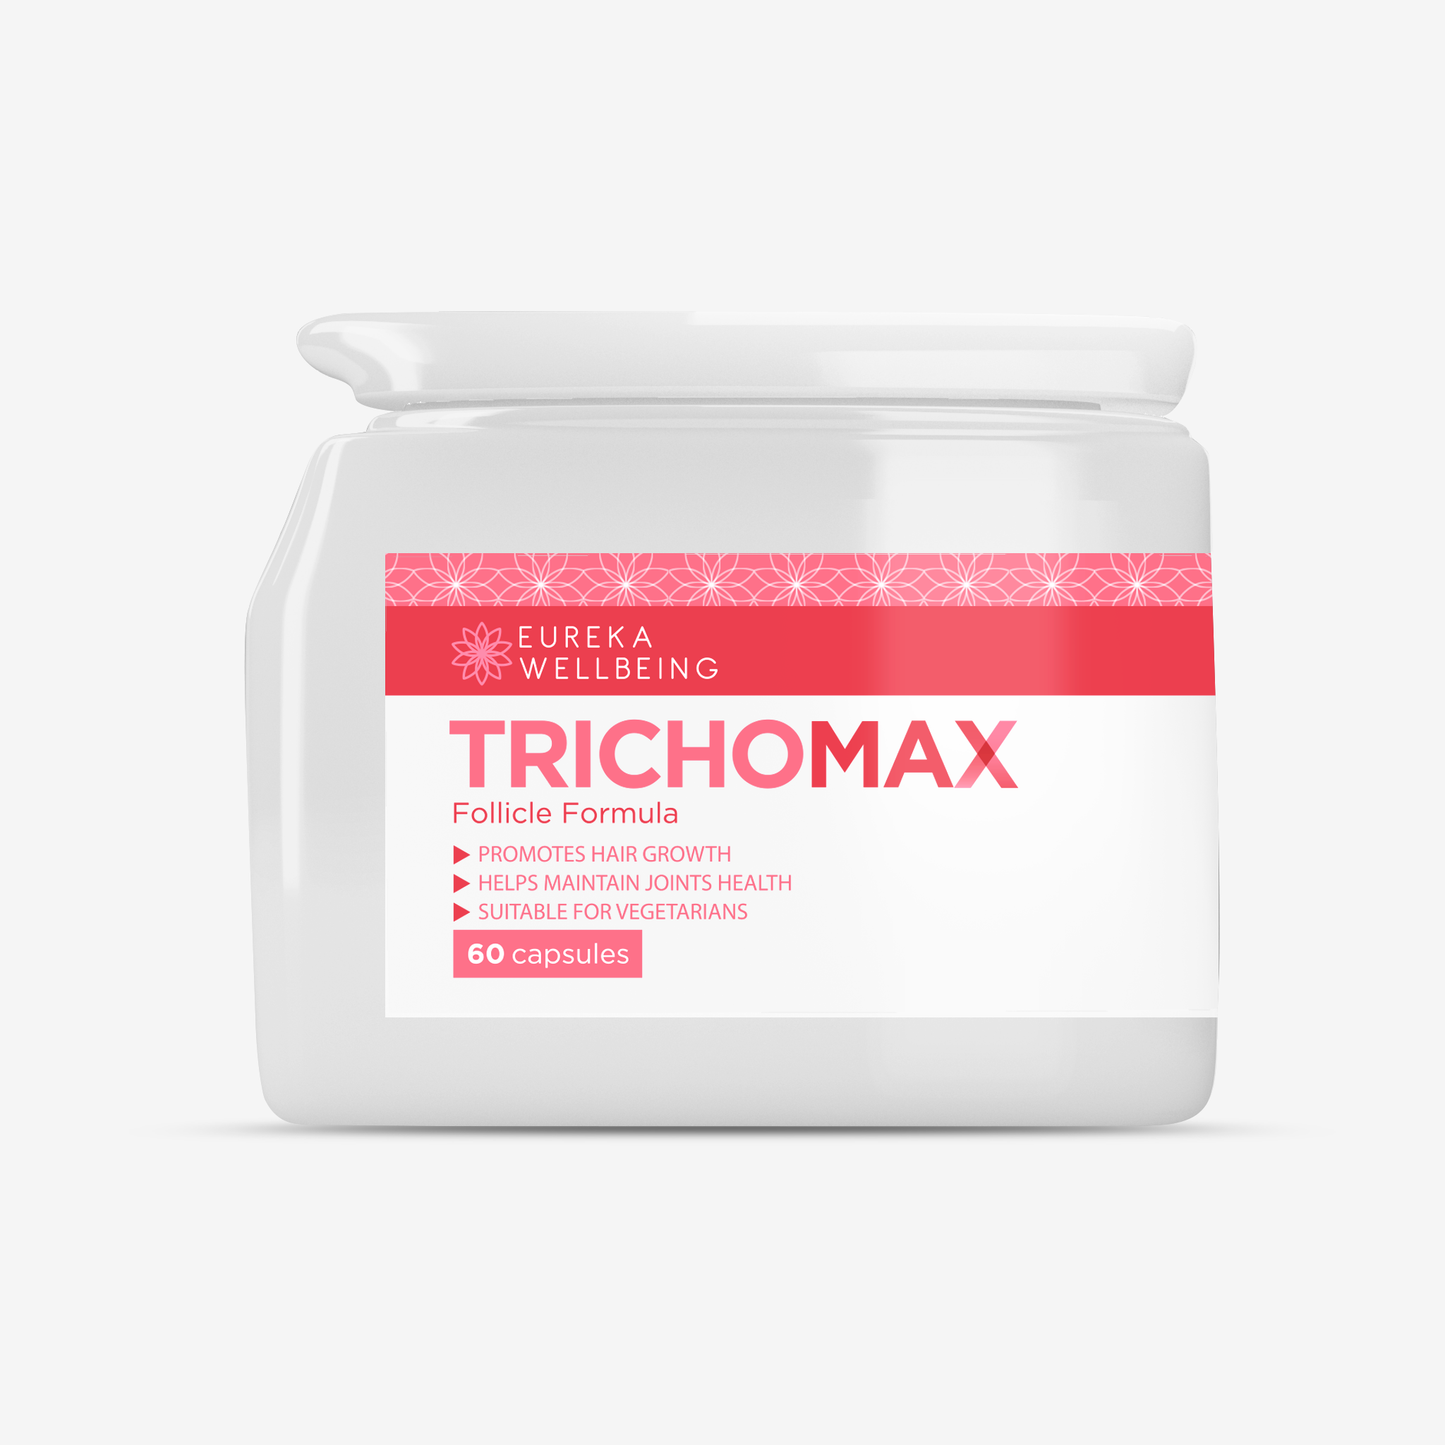 TrichoMax – Follicle Formula